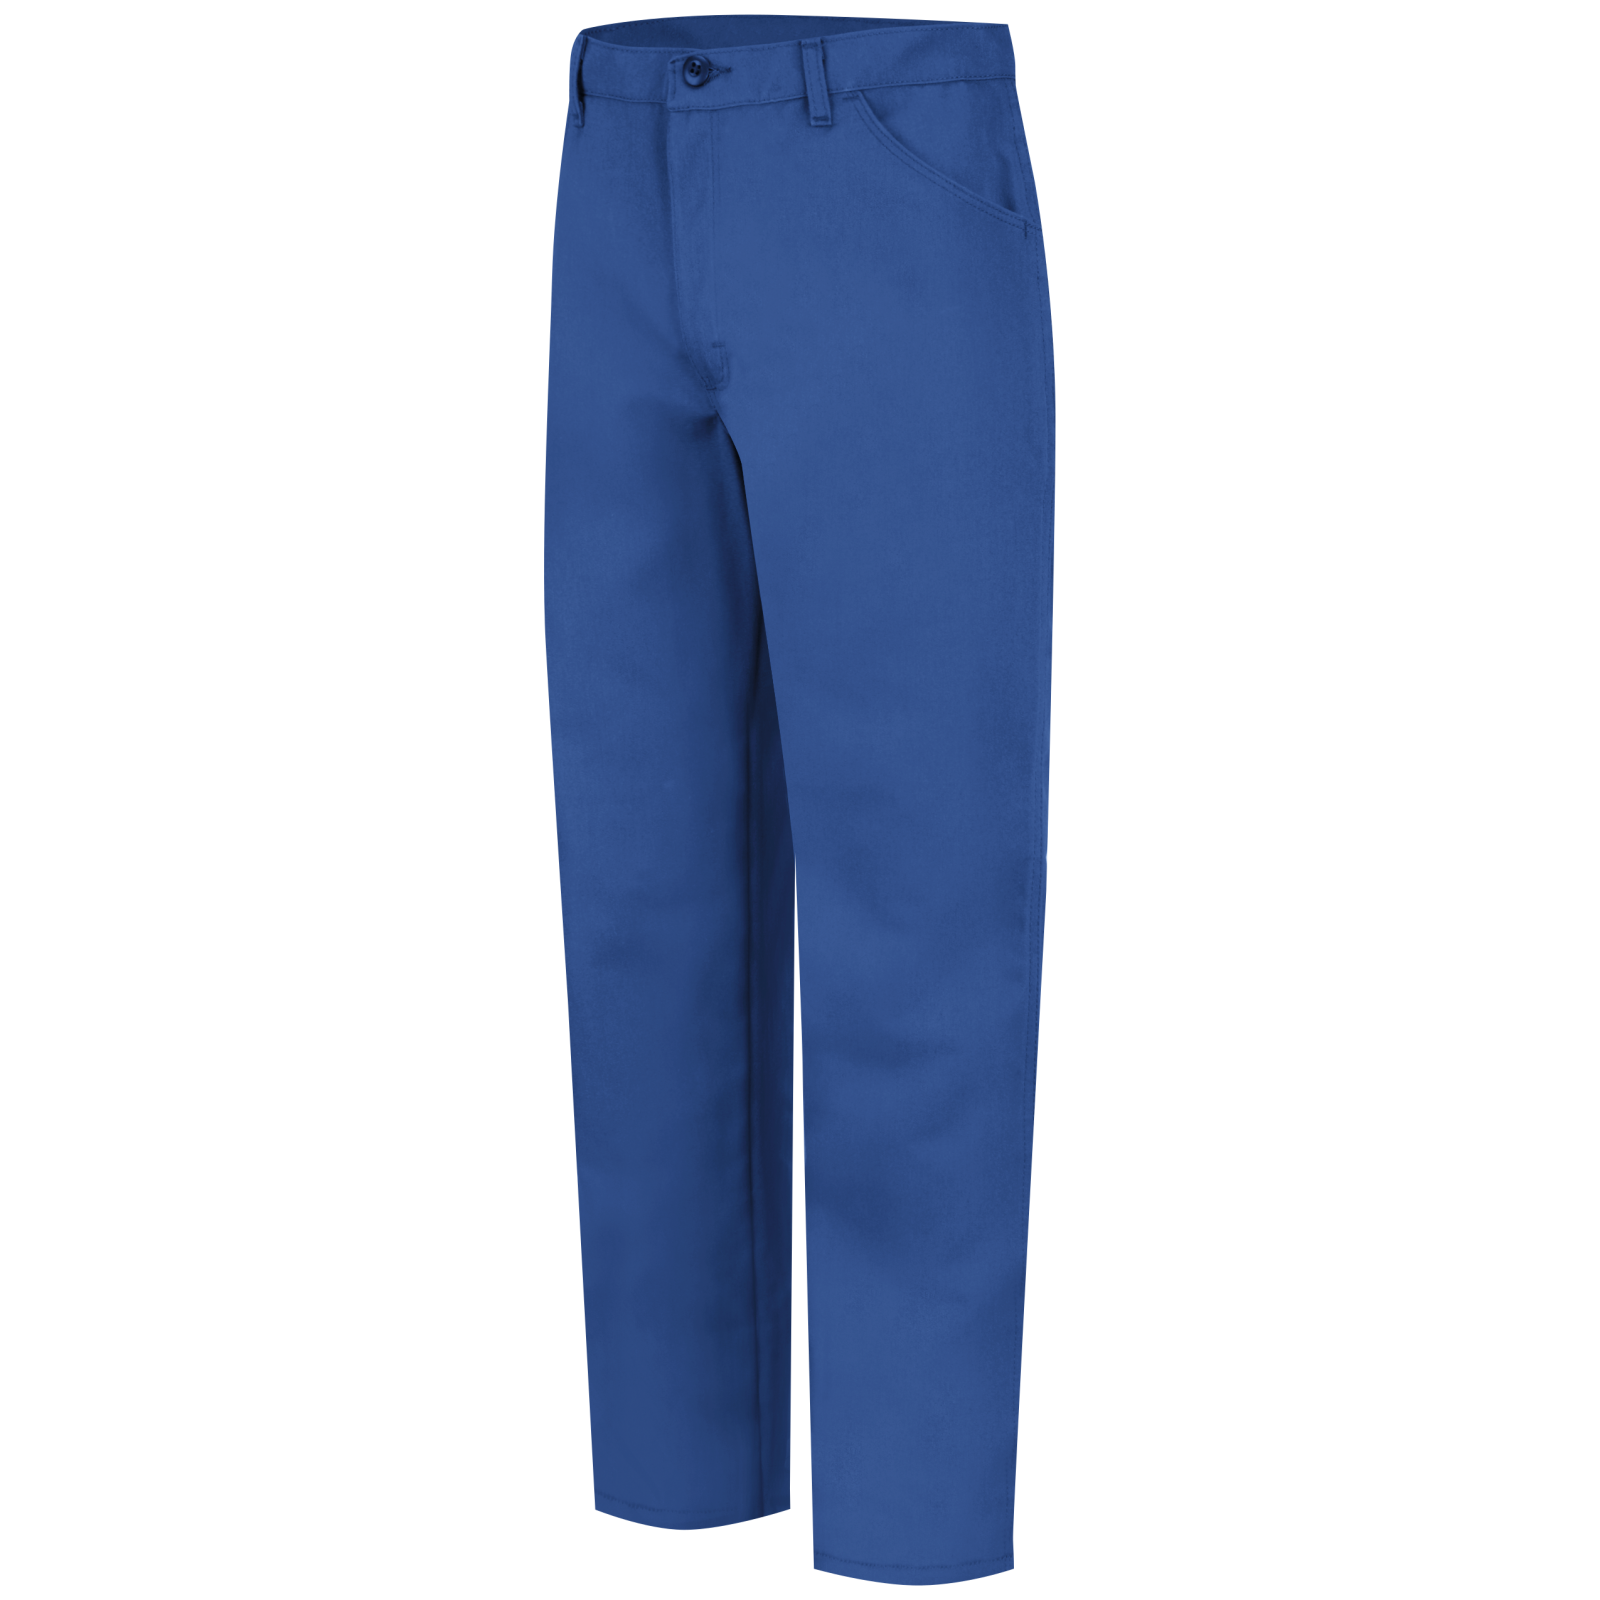 Good And Cheap Work Trousers Ardon Safety Vision all Colours, Oeko Tex  Bundhosen | eBay